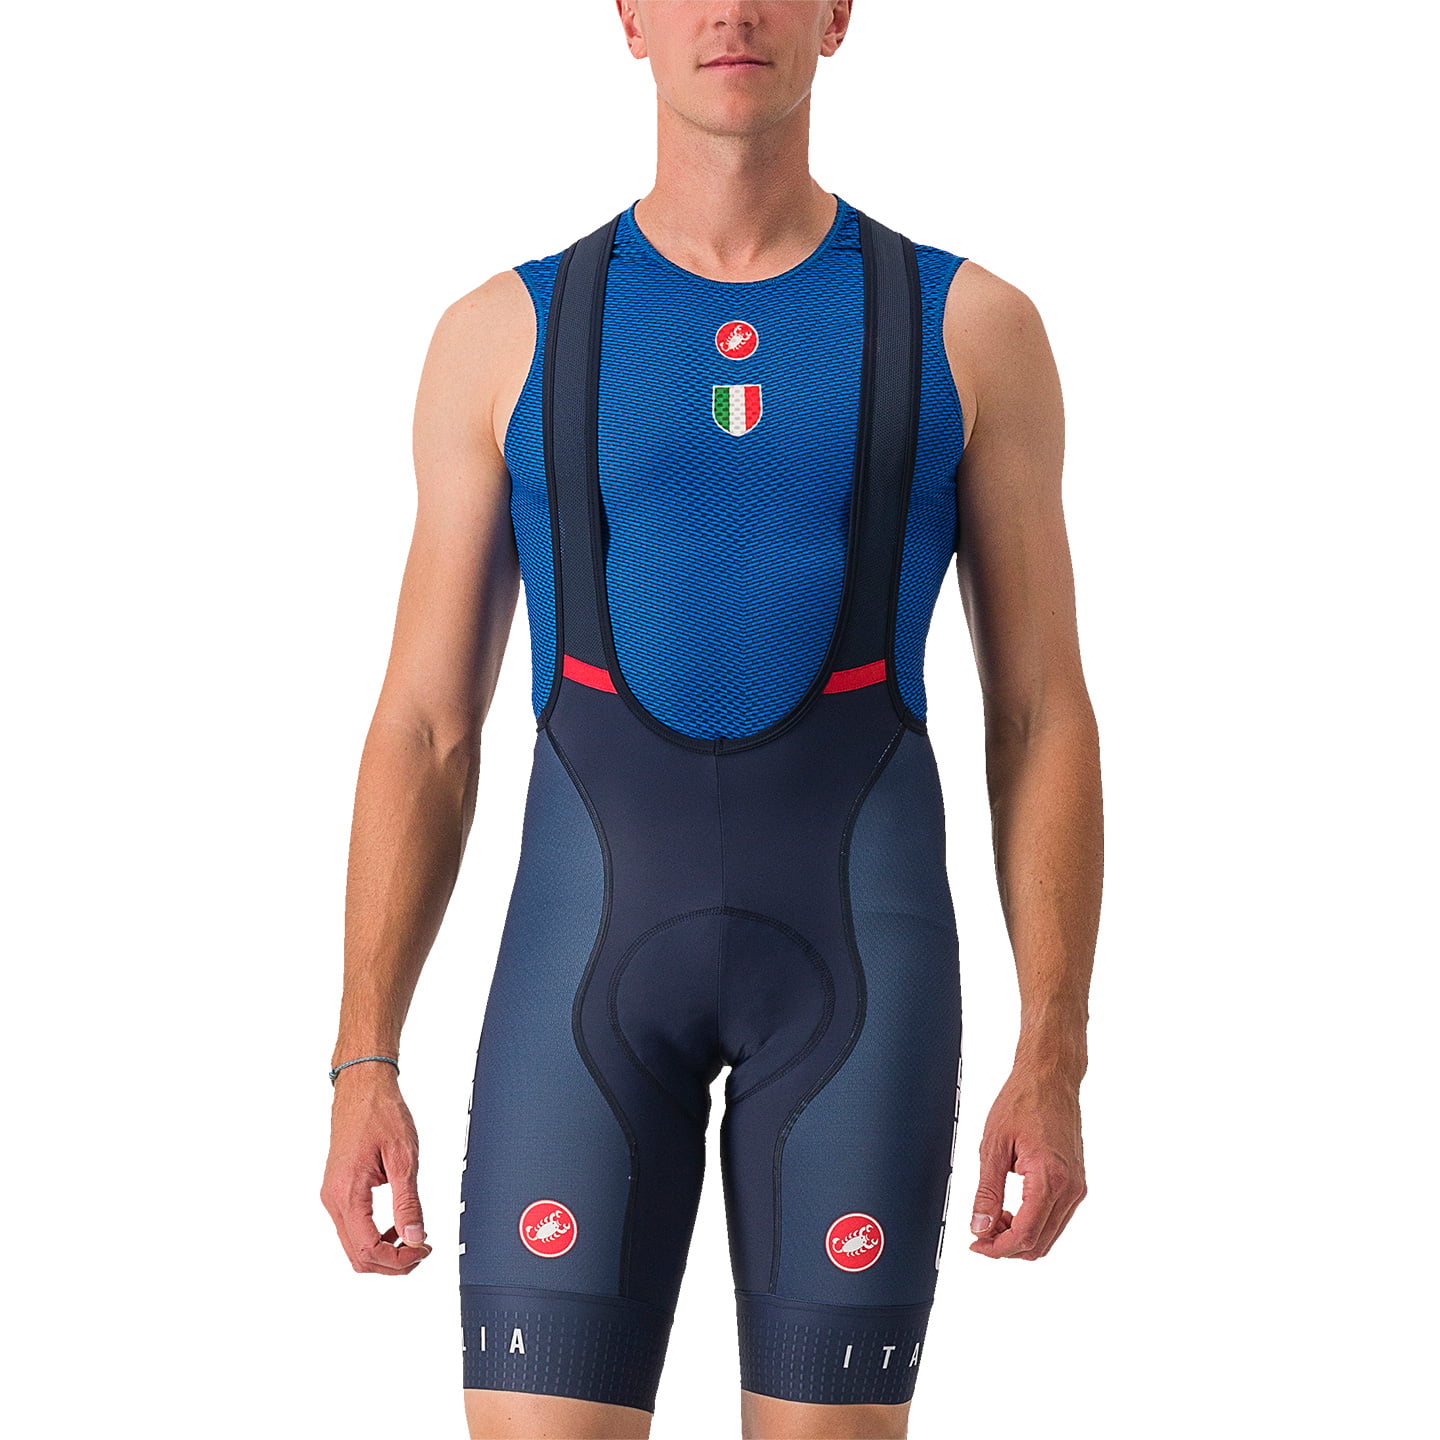 ITALIAN NATIONIAL TEAM 2024 Bib Shorts, for men, size M, Cycle shorts, Cycling clothing